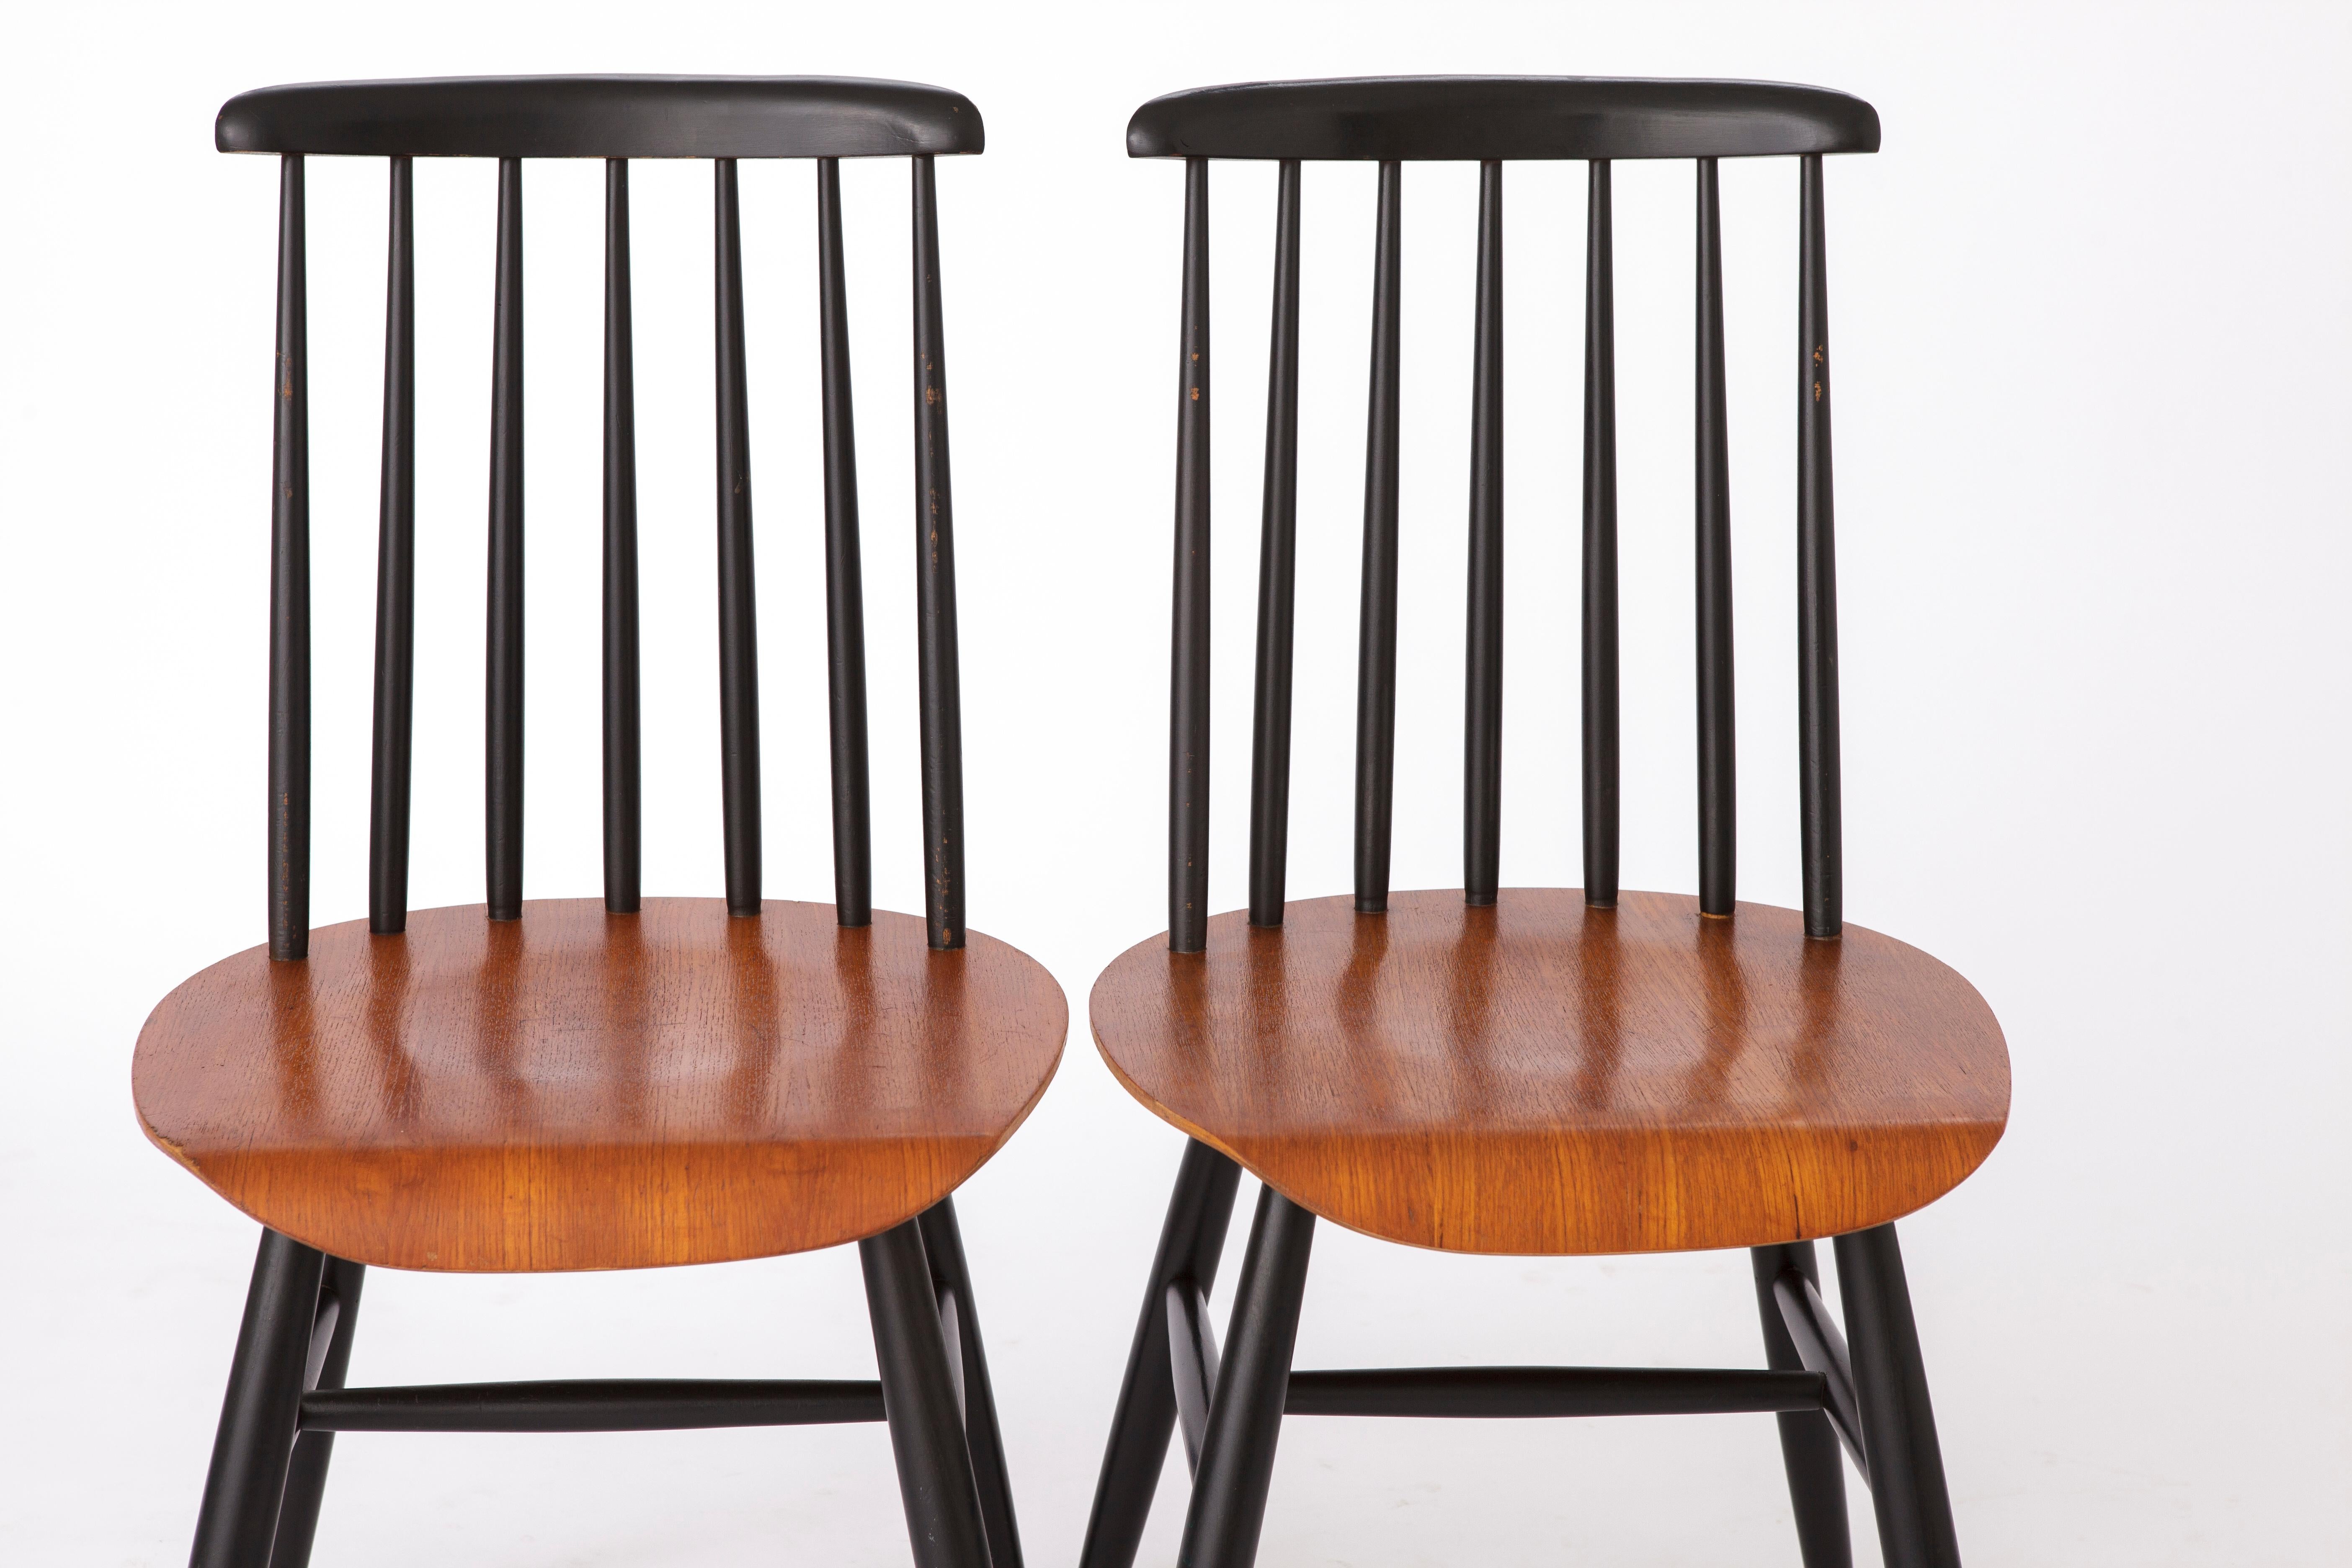 Polished 2 Vintage Spindle Back Chairs 1960s-1970s - Sweden For Sale